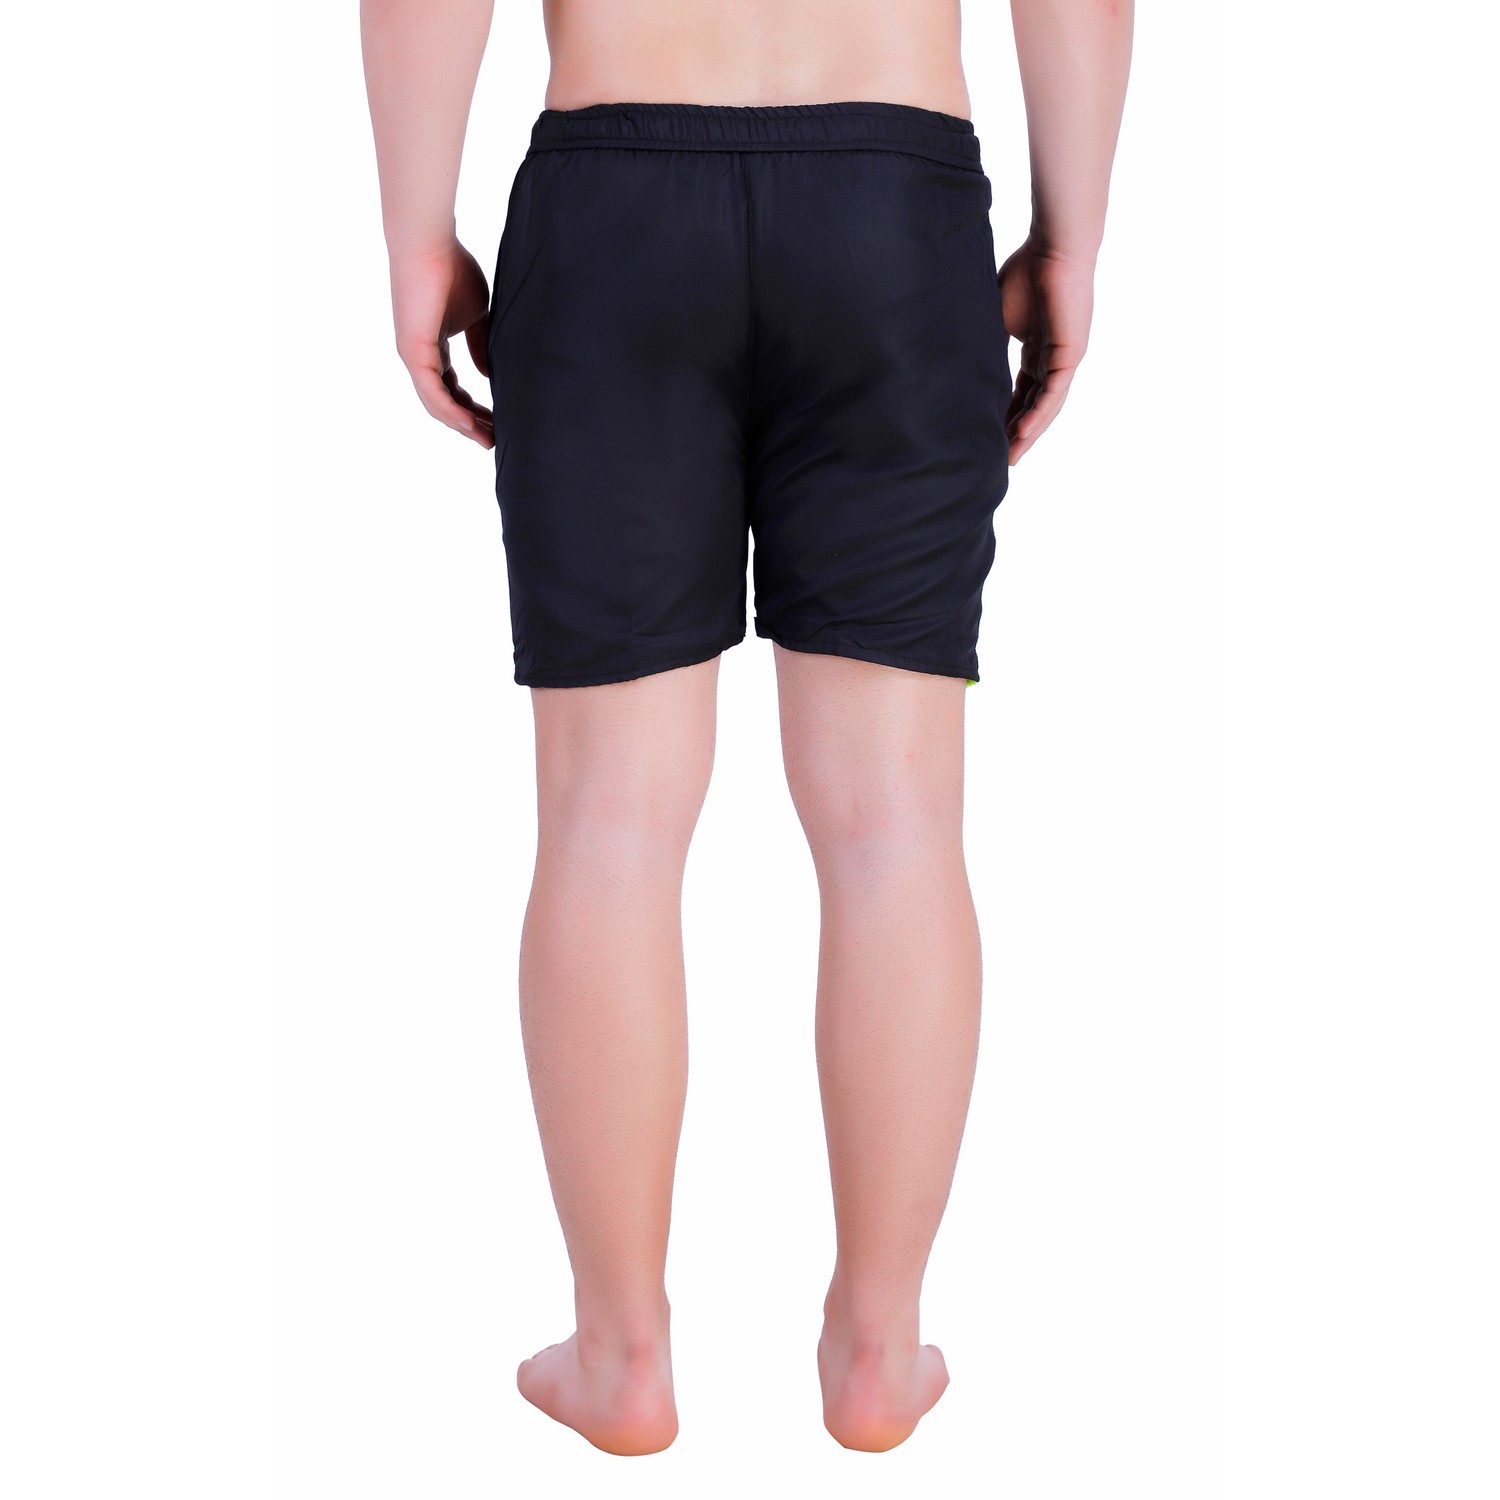 Buy Stars Collection Men's Cotton Shorts Boxer shorts 2 pcs combo Black ...